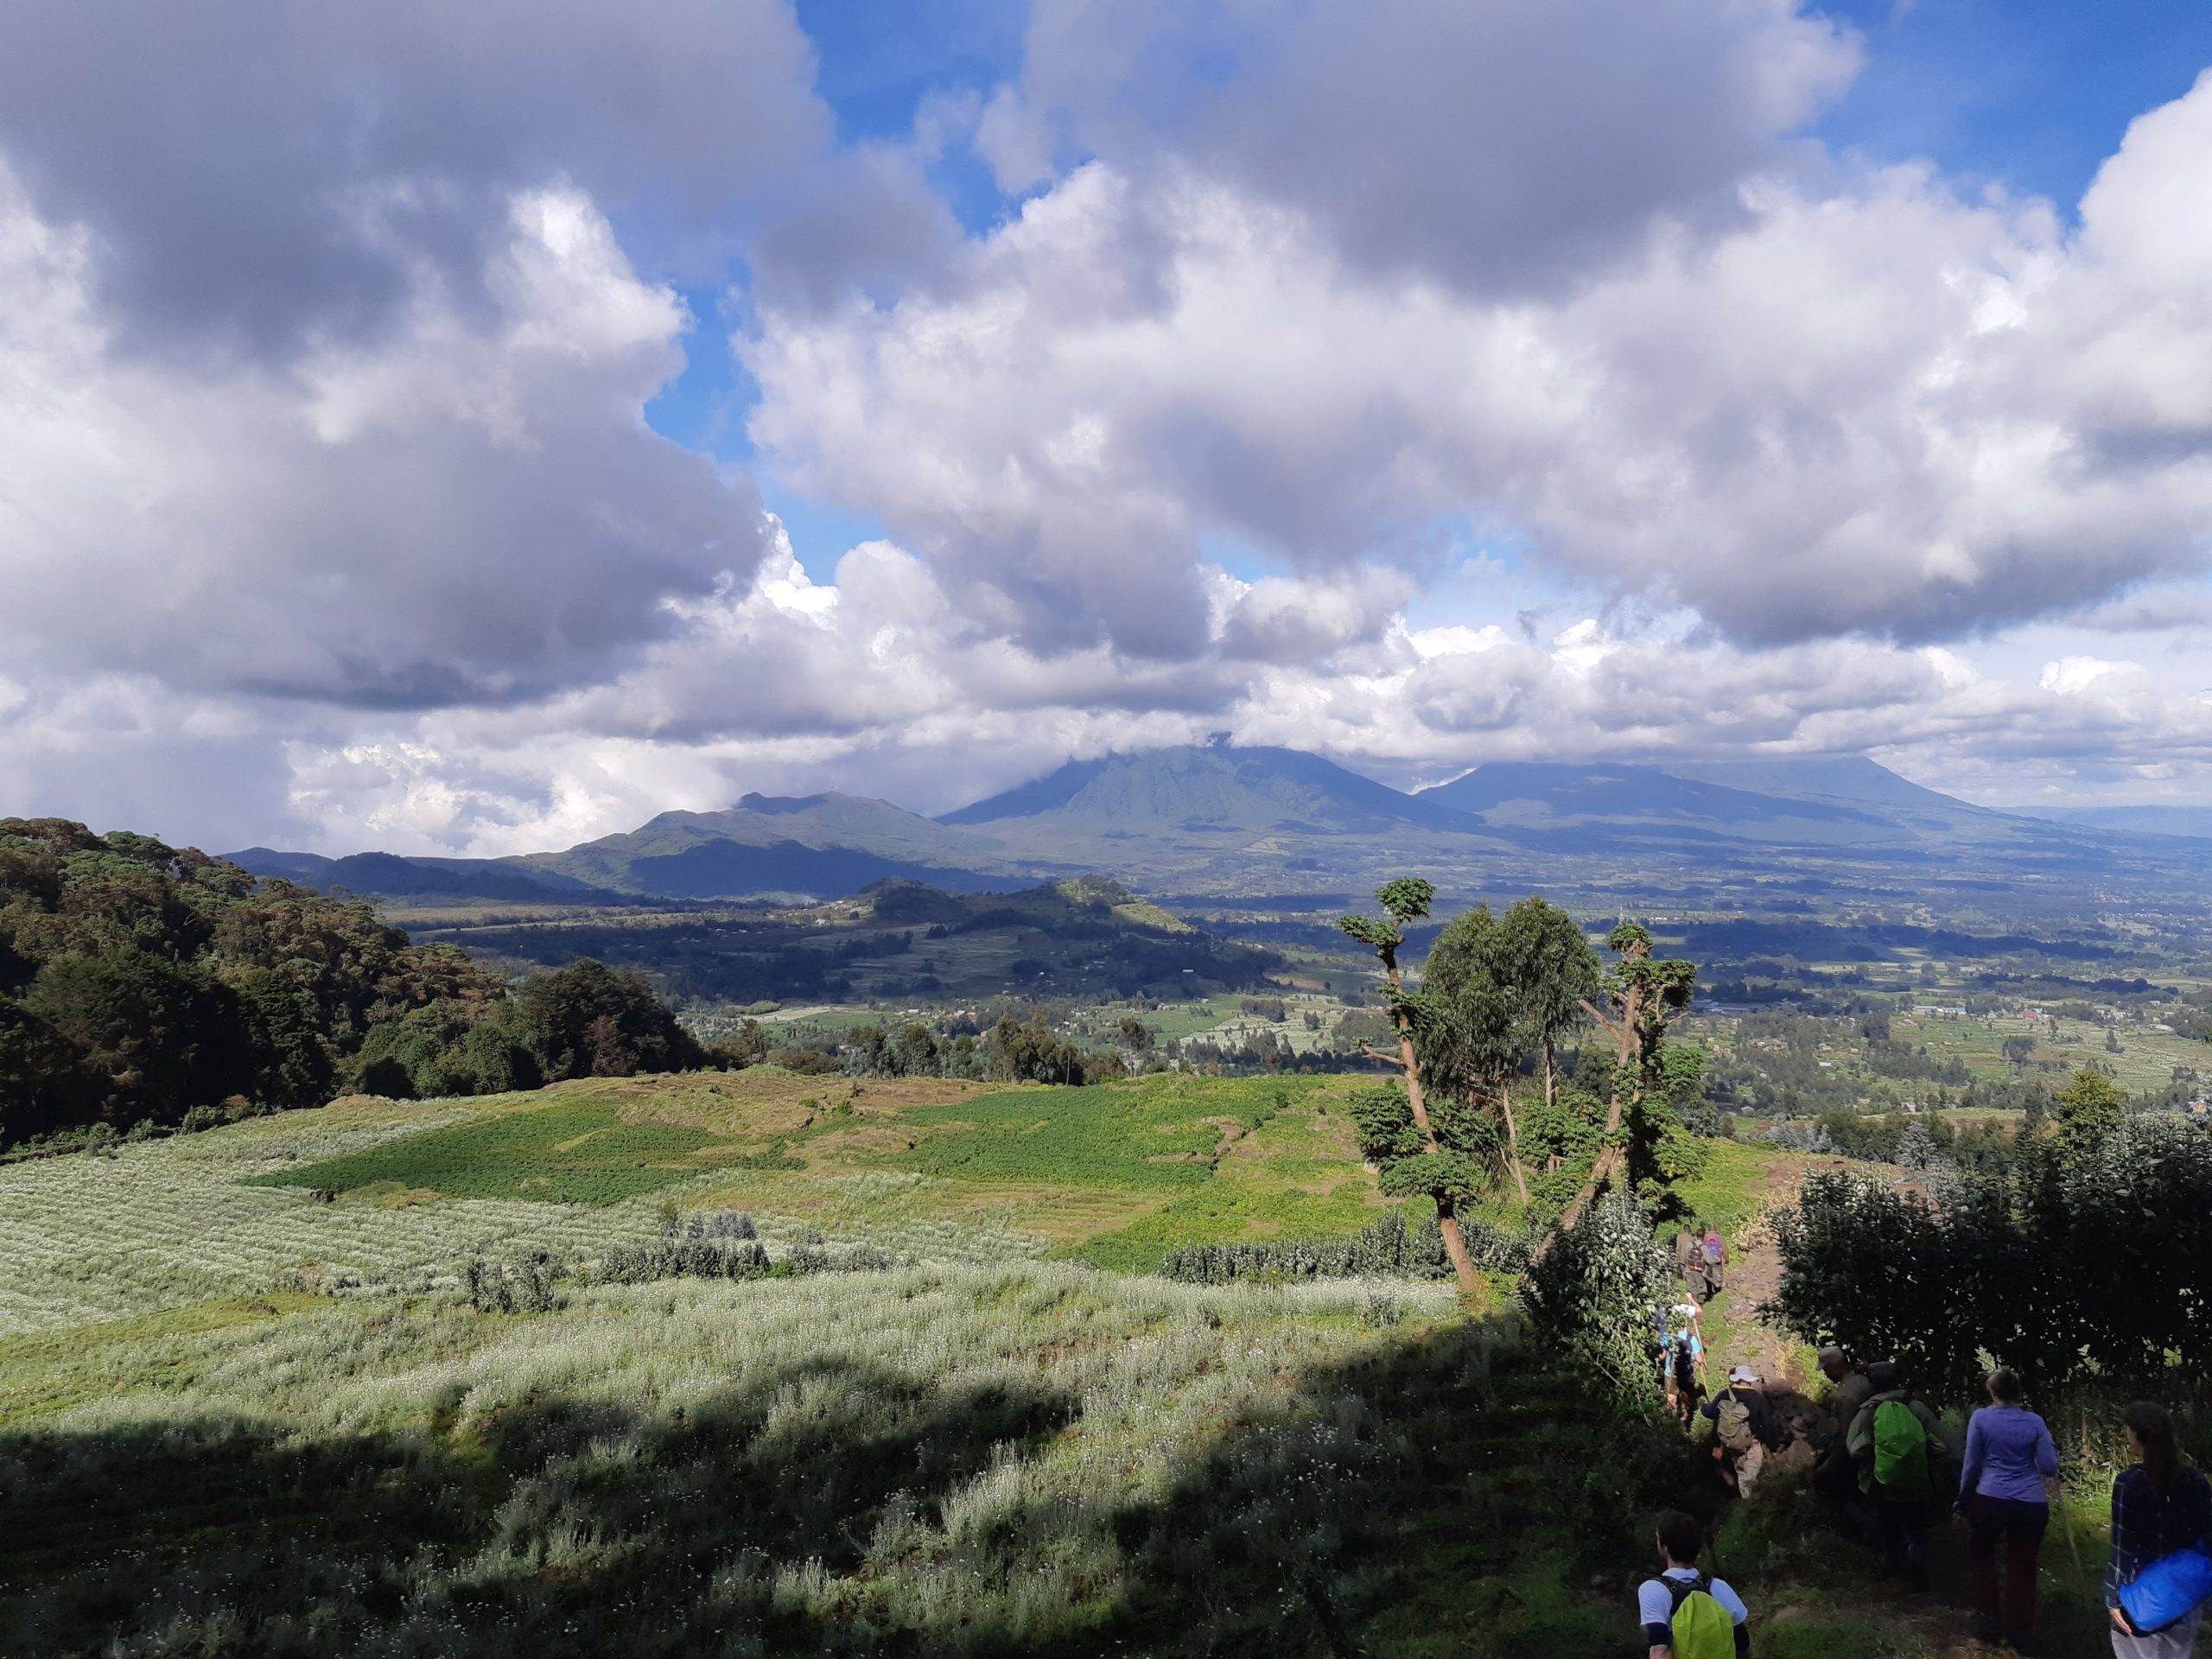 The muddiest hike of my life- Volcanoes National Park in Rwanda